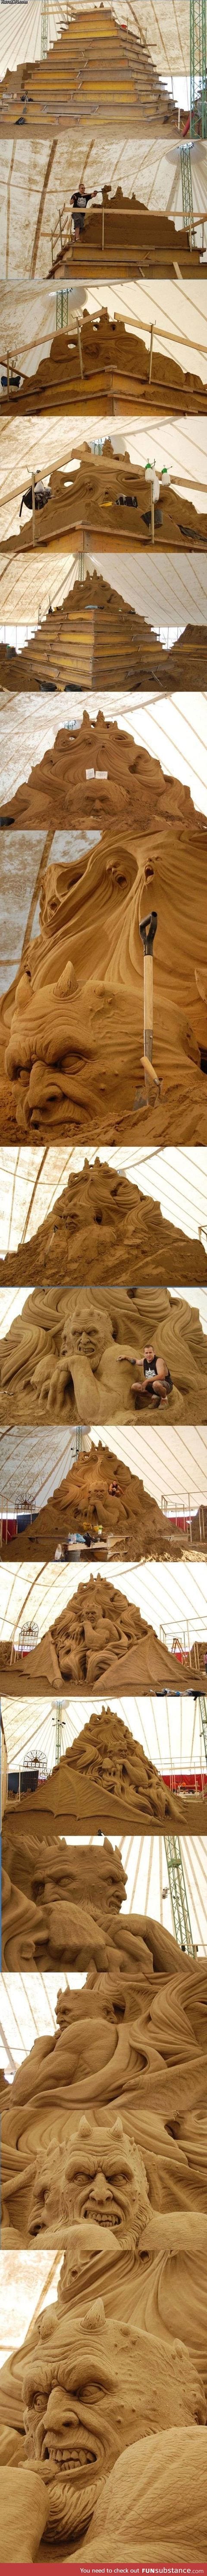 Amazing sand sculpture